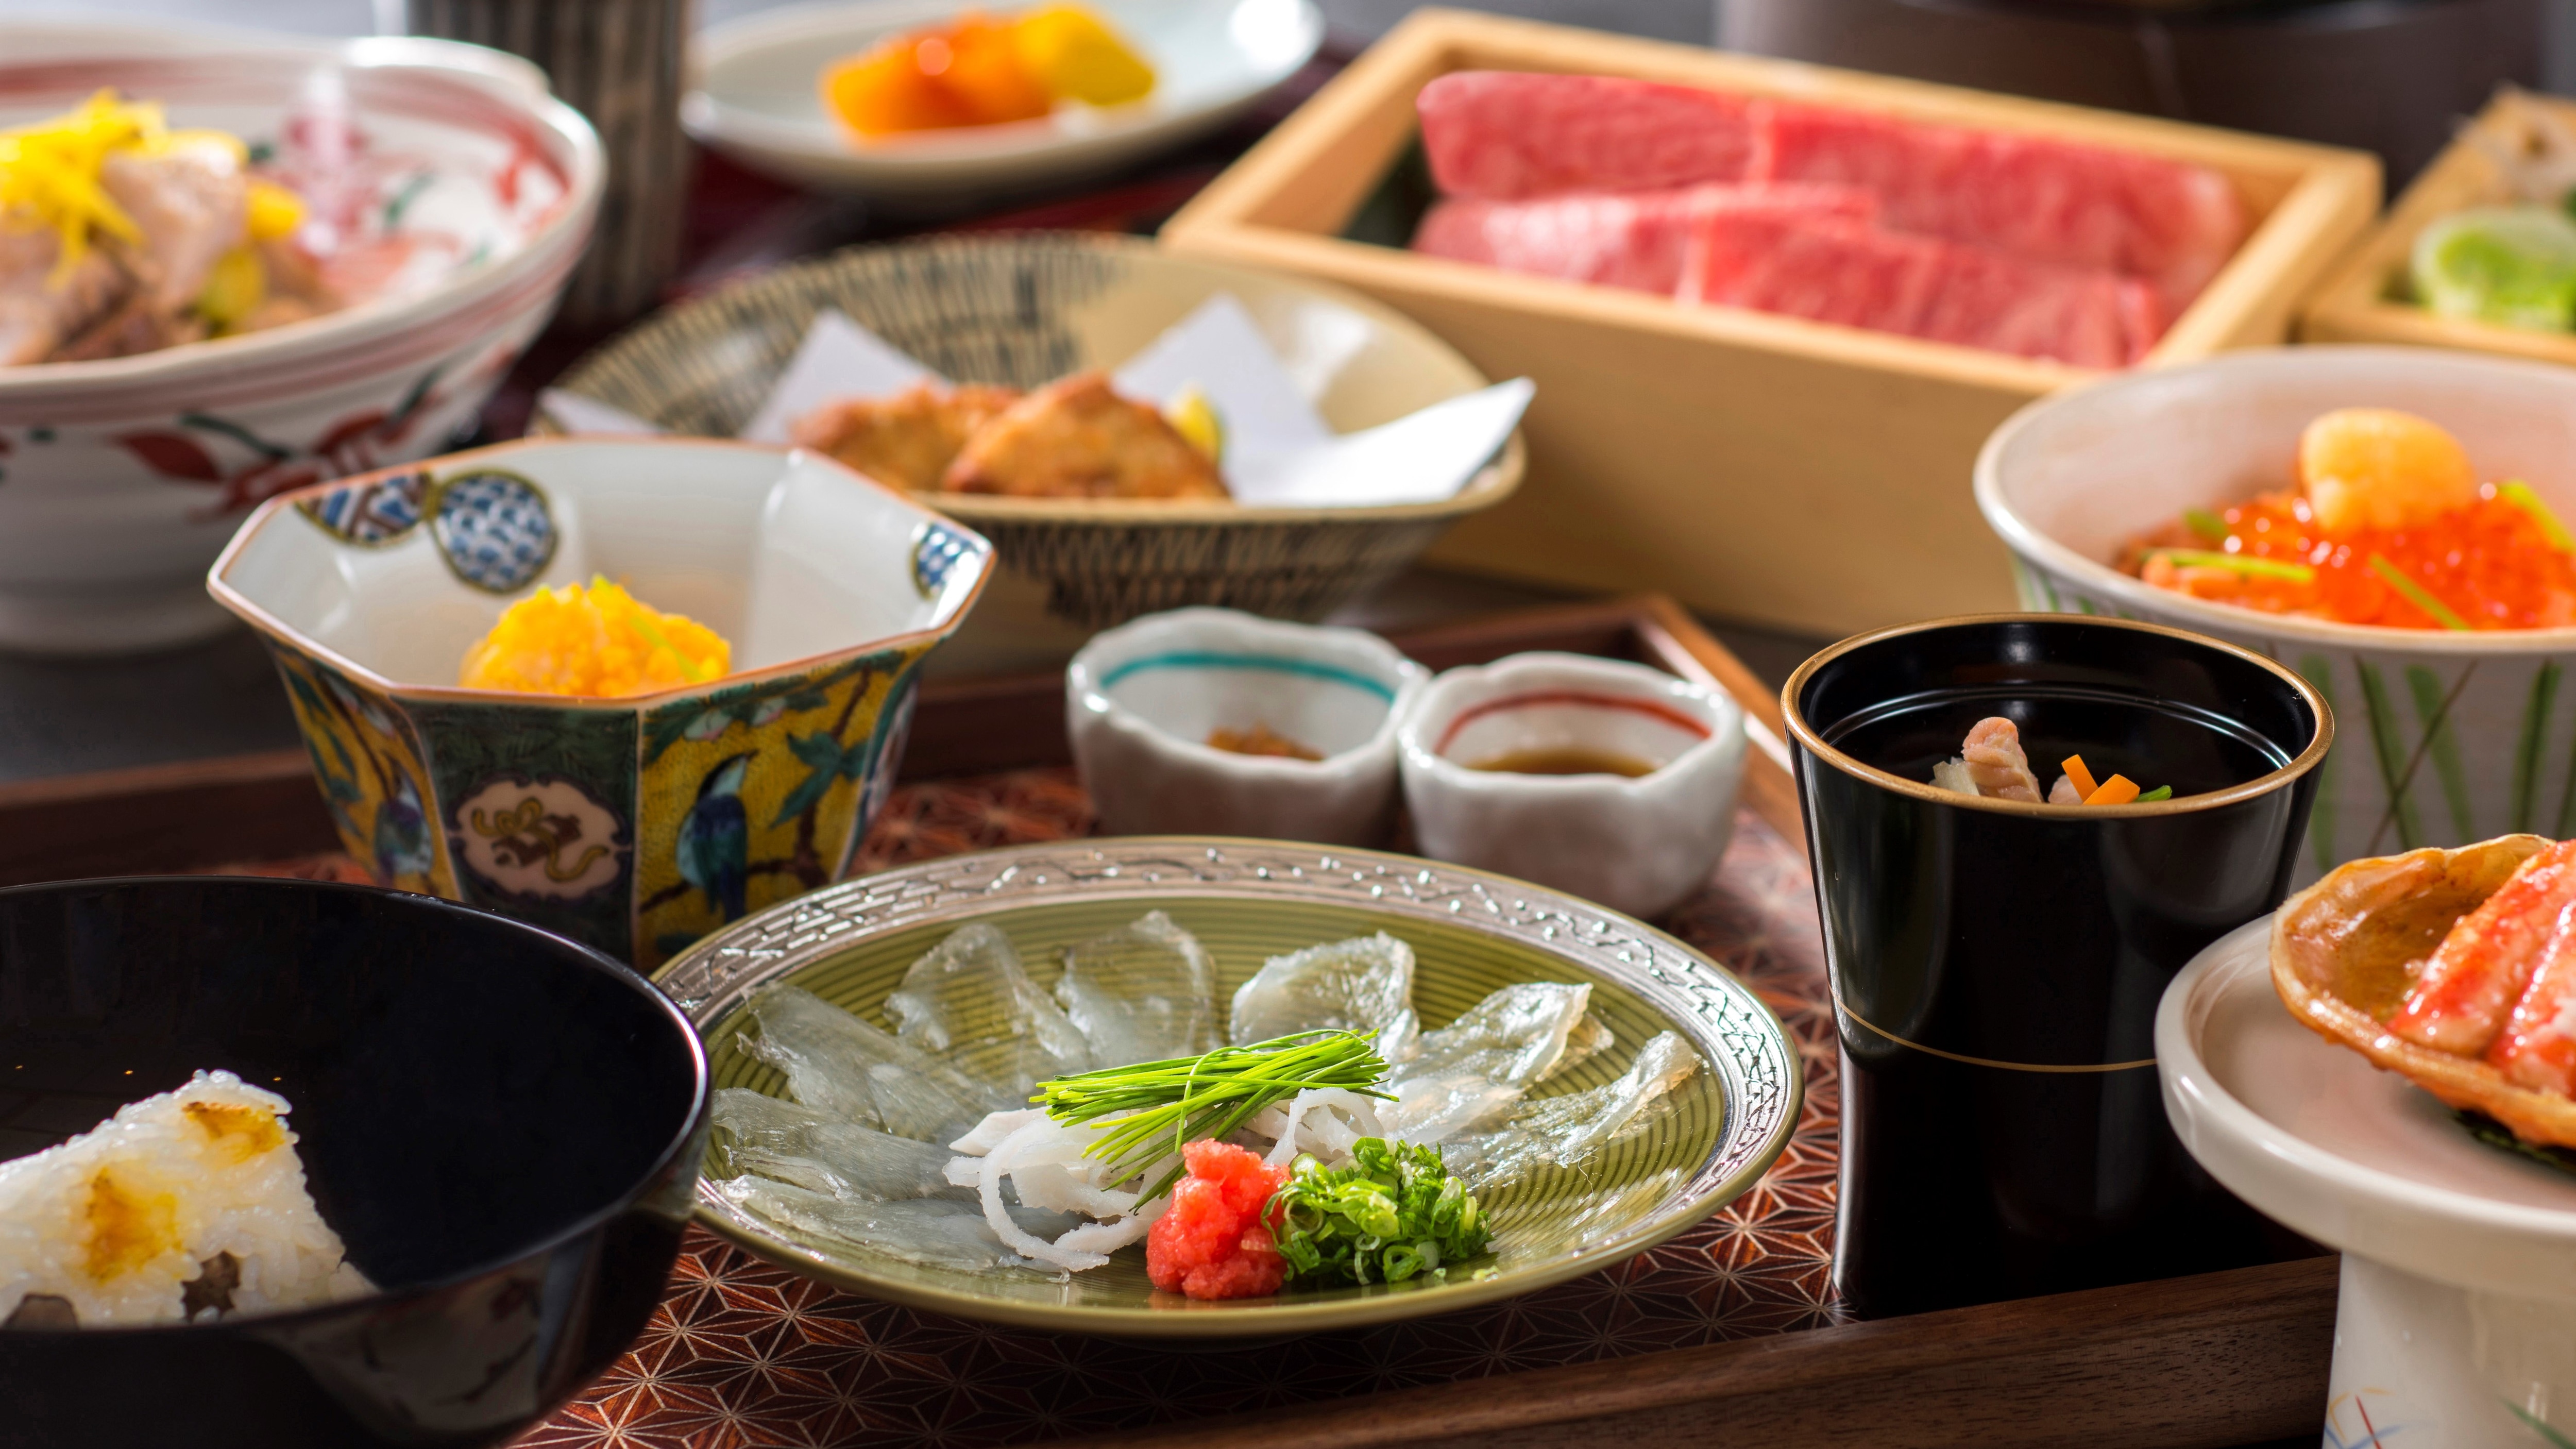 Tea kaiseki-style course meal using plenty of seasonal ingredients